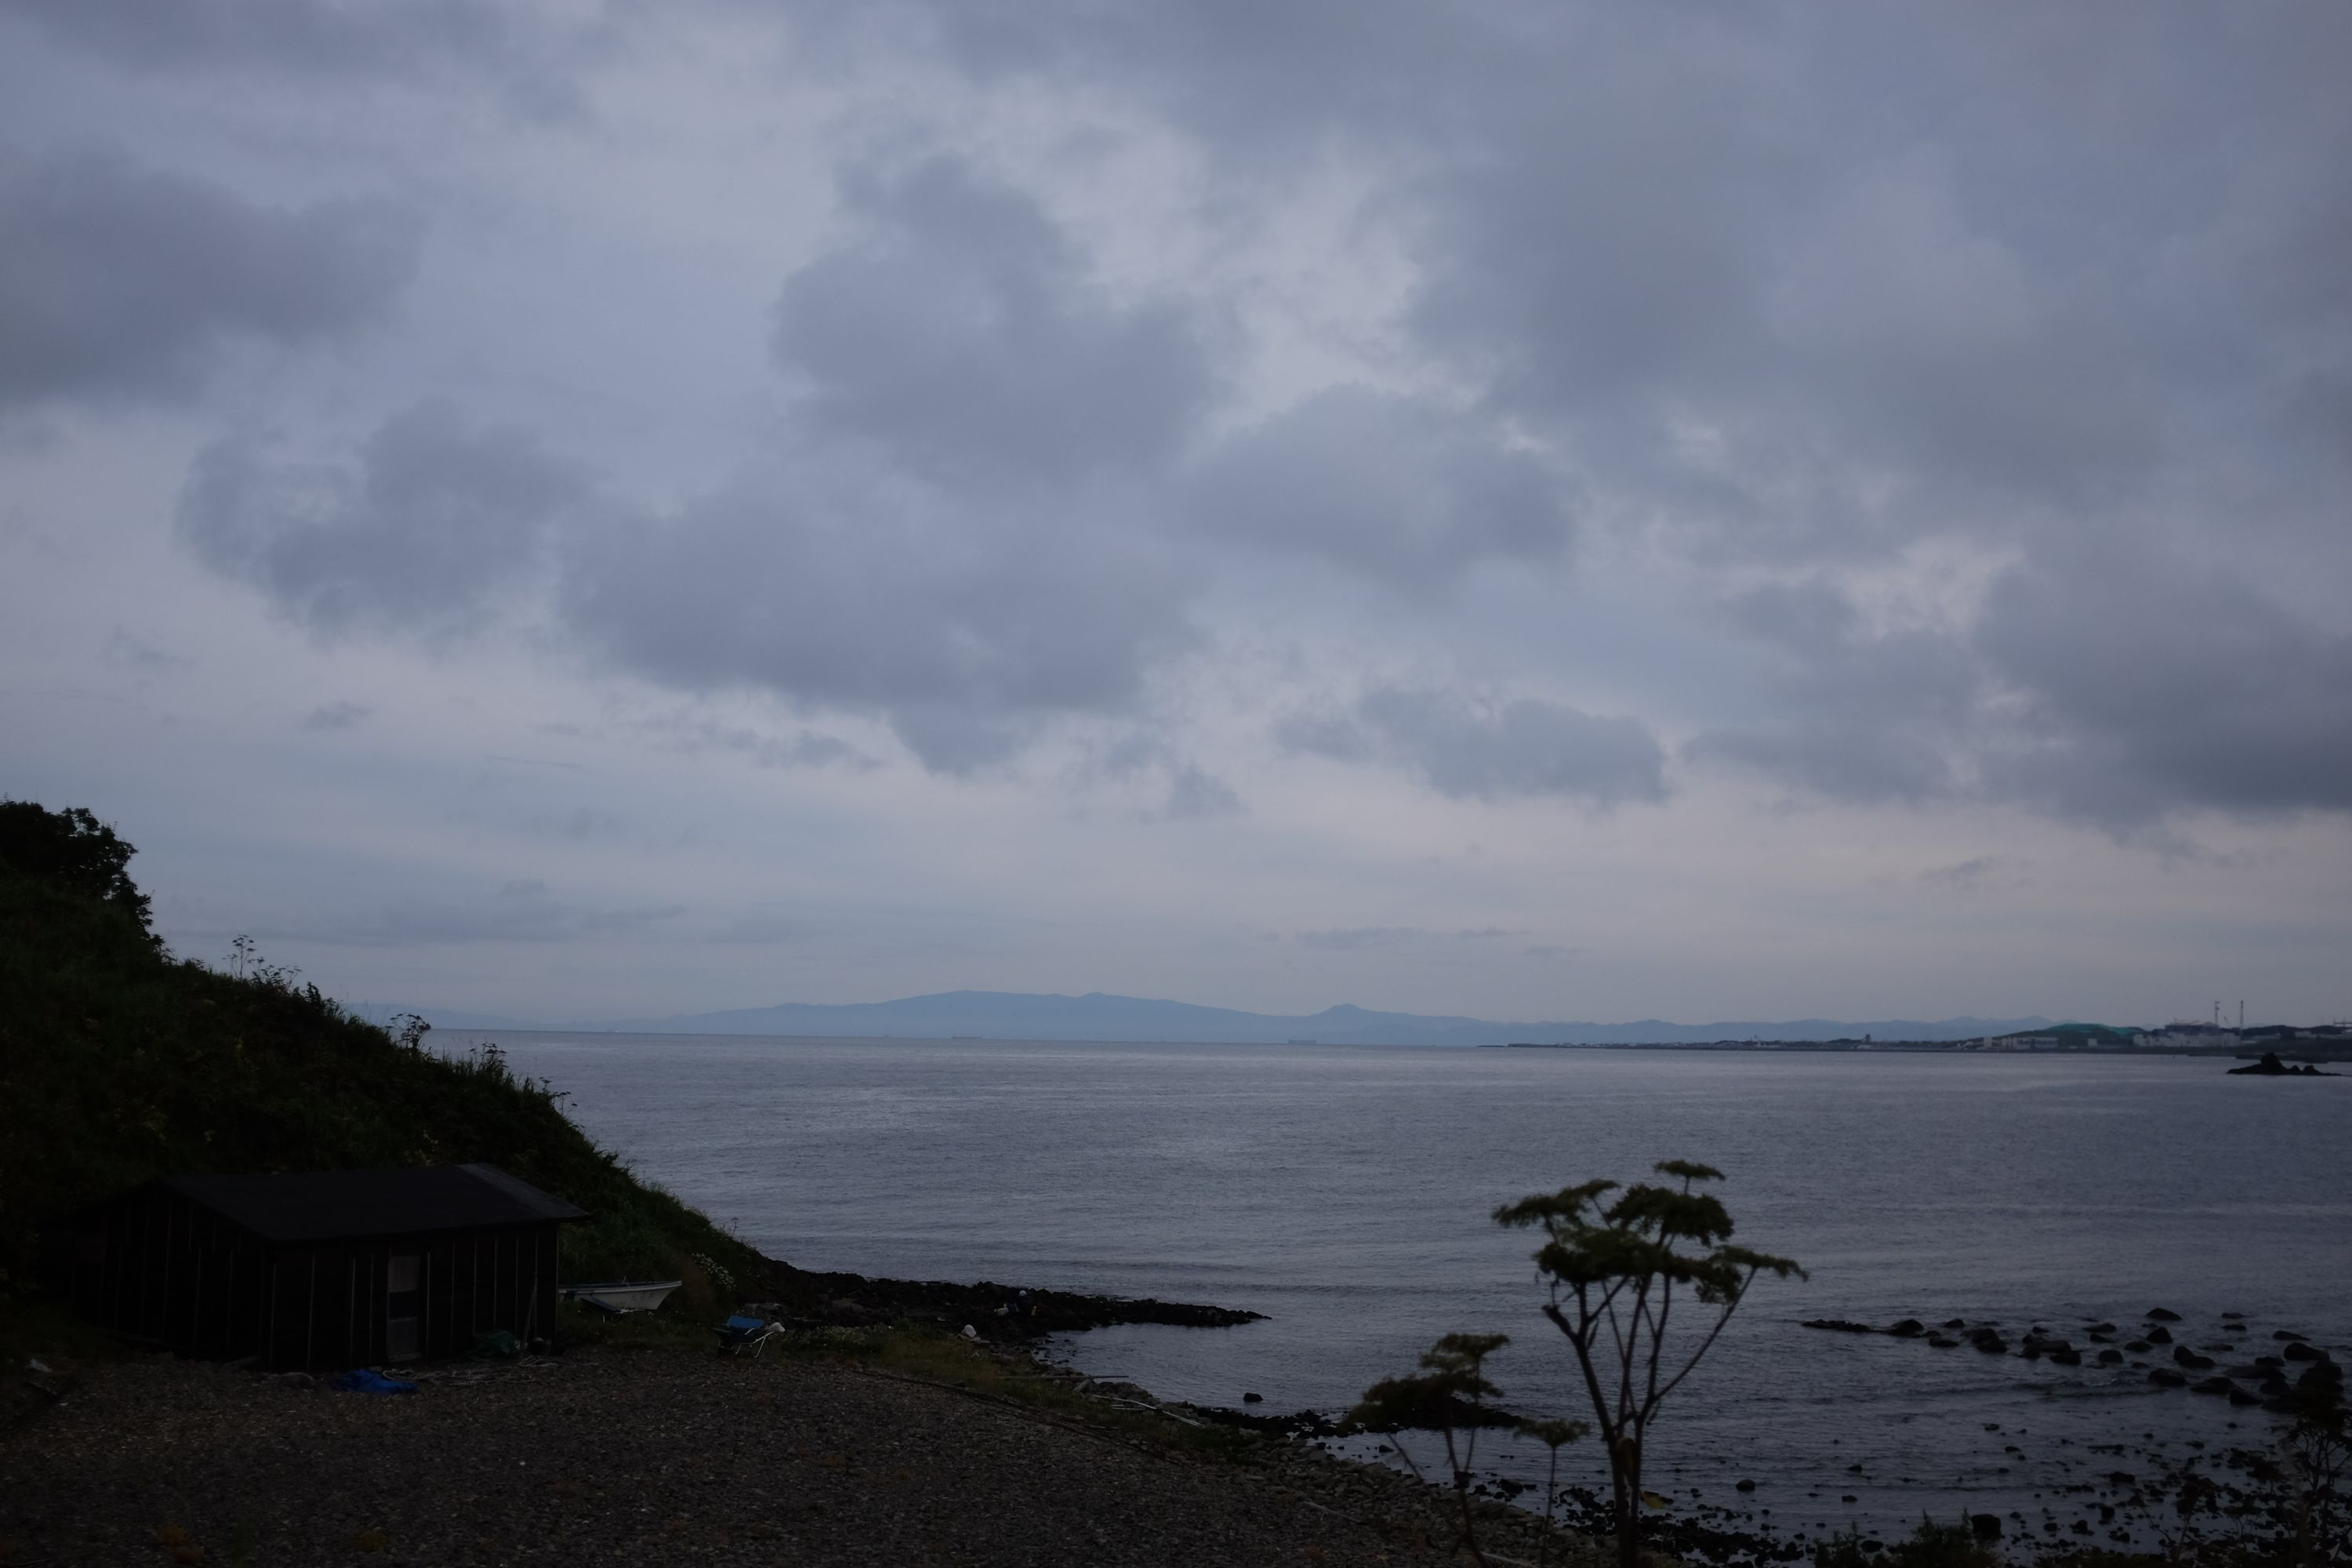 Across a grey seascape, the mountains of Hokkaido are visible.